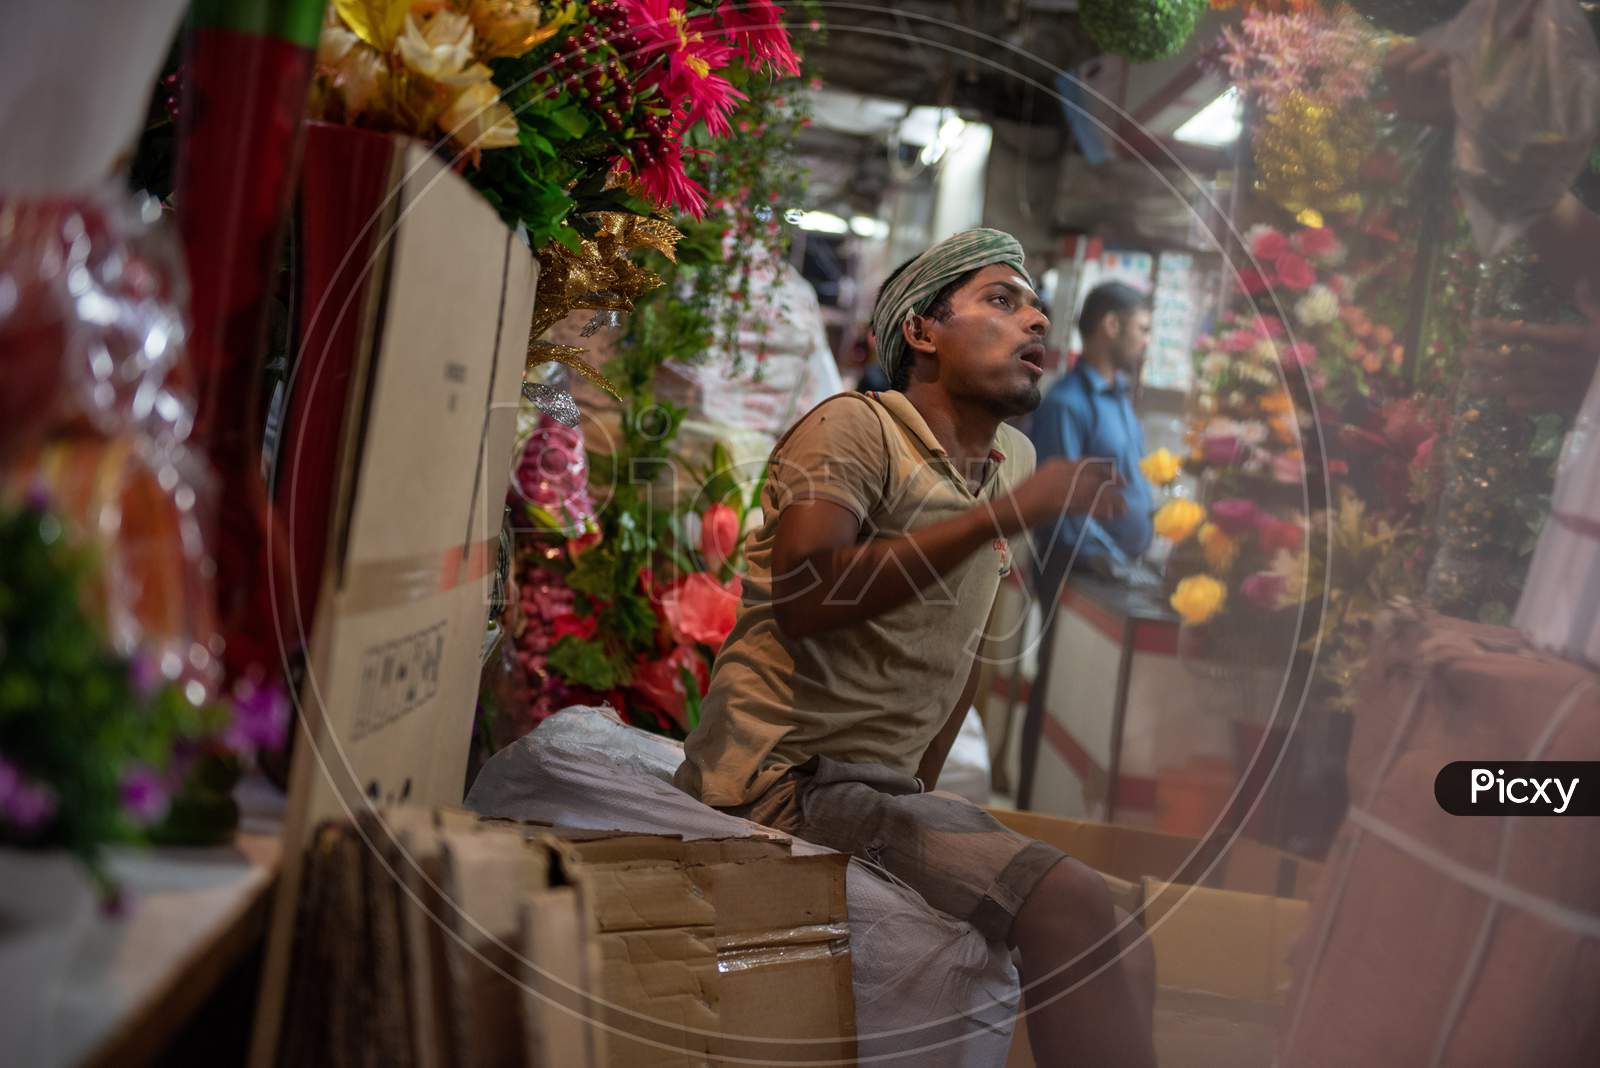 Indian flower vendor in the street market